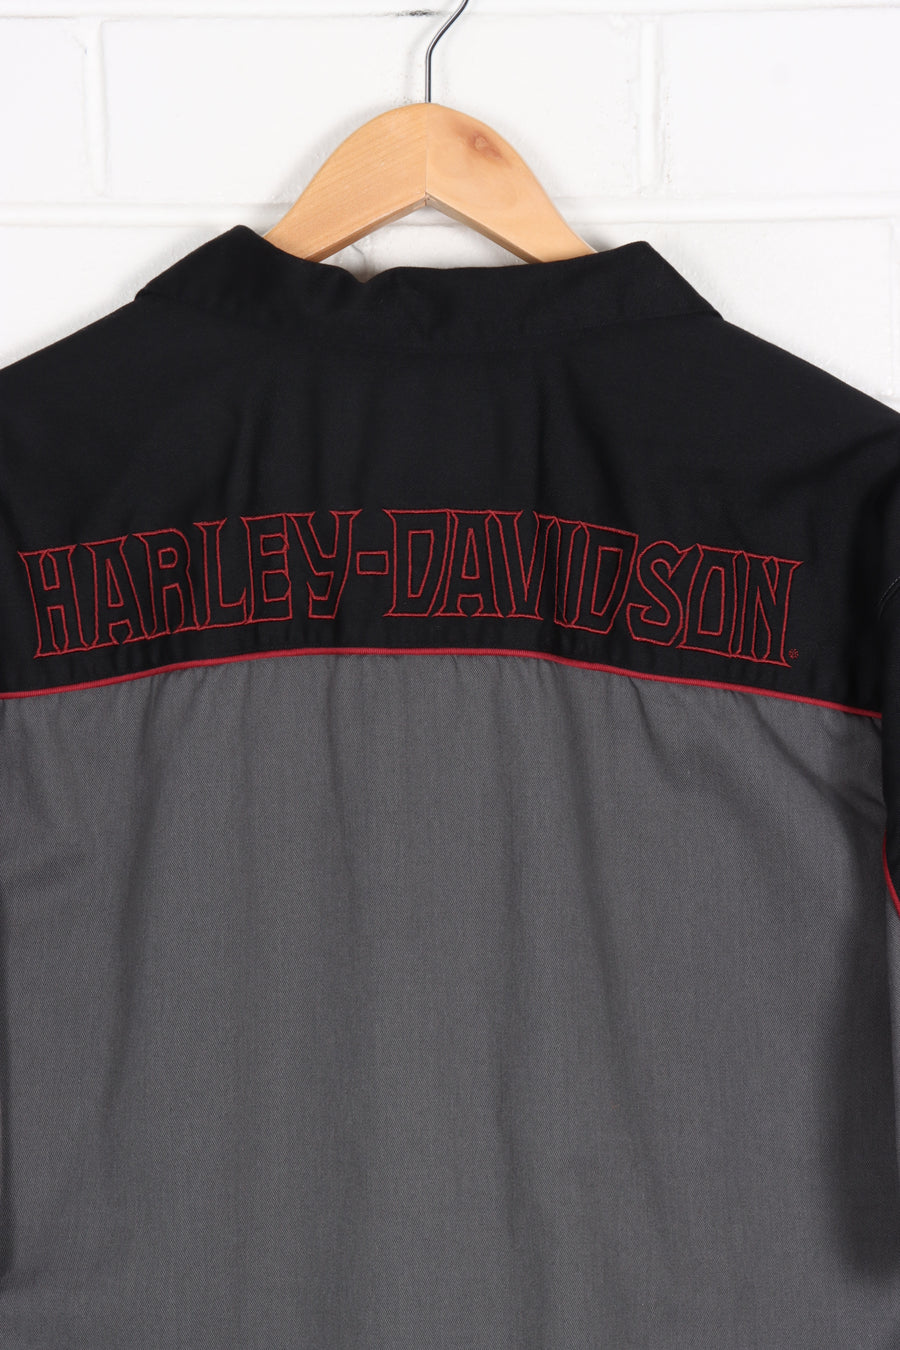 HARLEY DAVIDSON Embroidered Short Sleeve Shirt (L-XL)